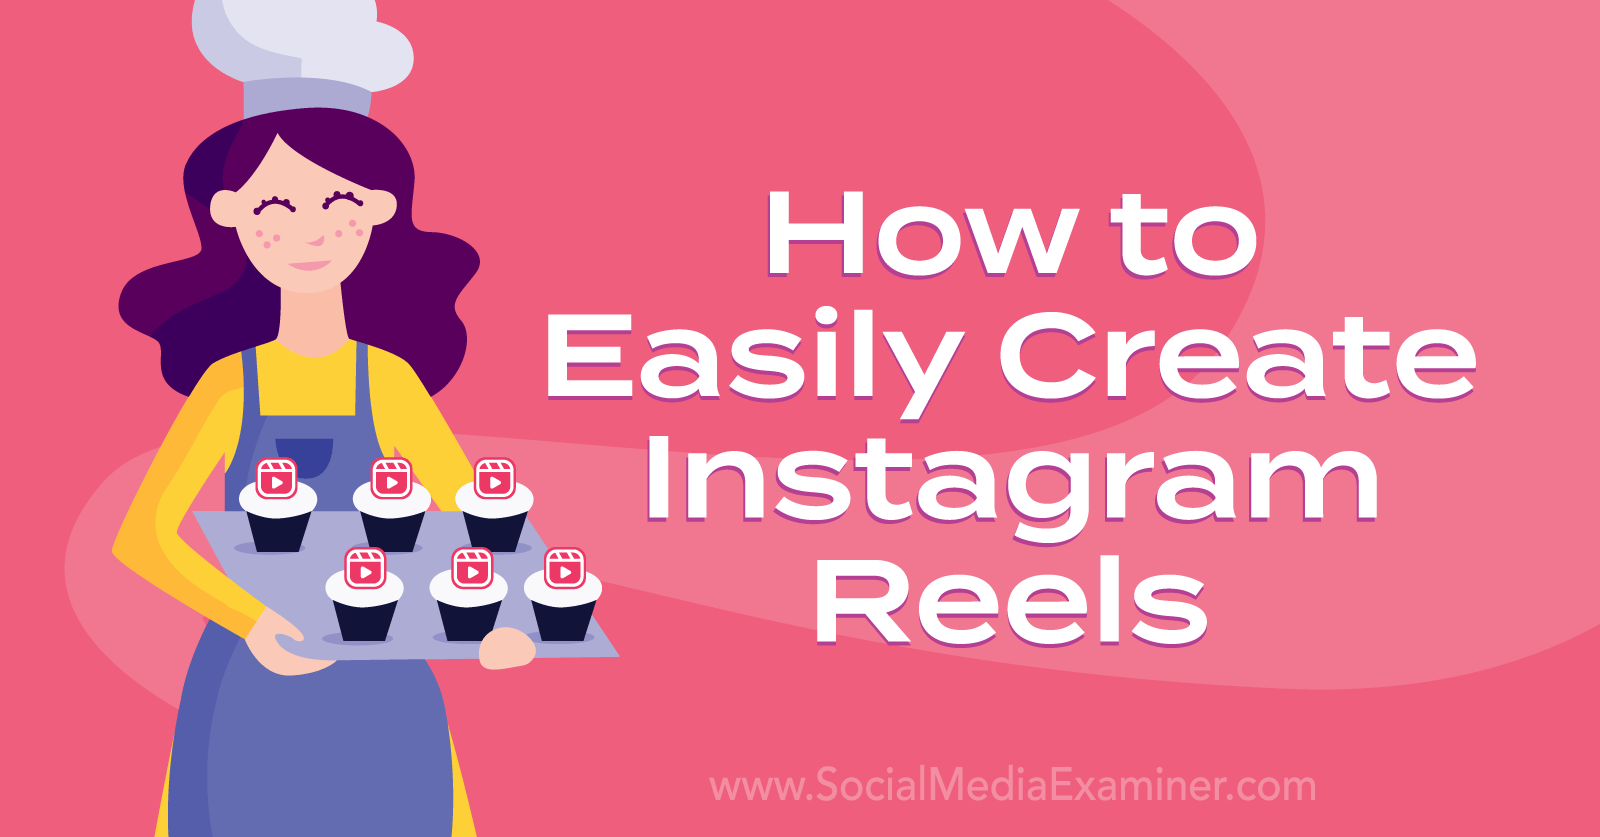 How to Easily Create Instagram Reels by Social Media Examiner